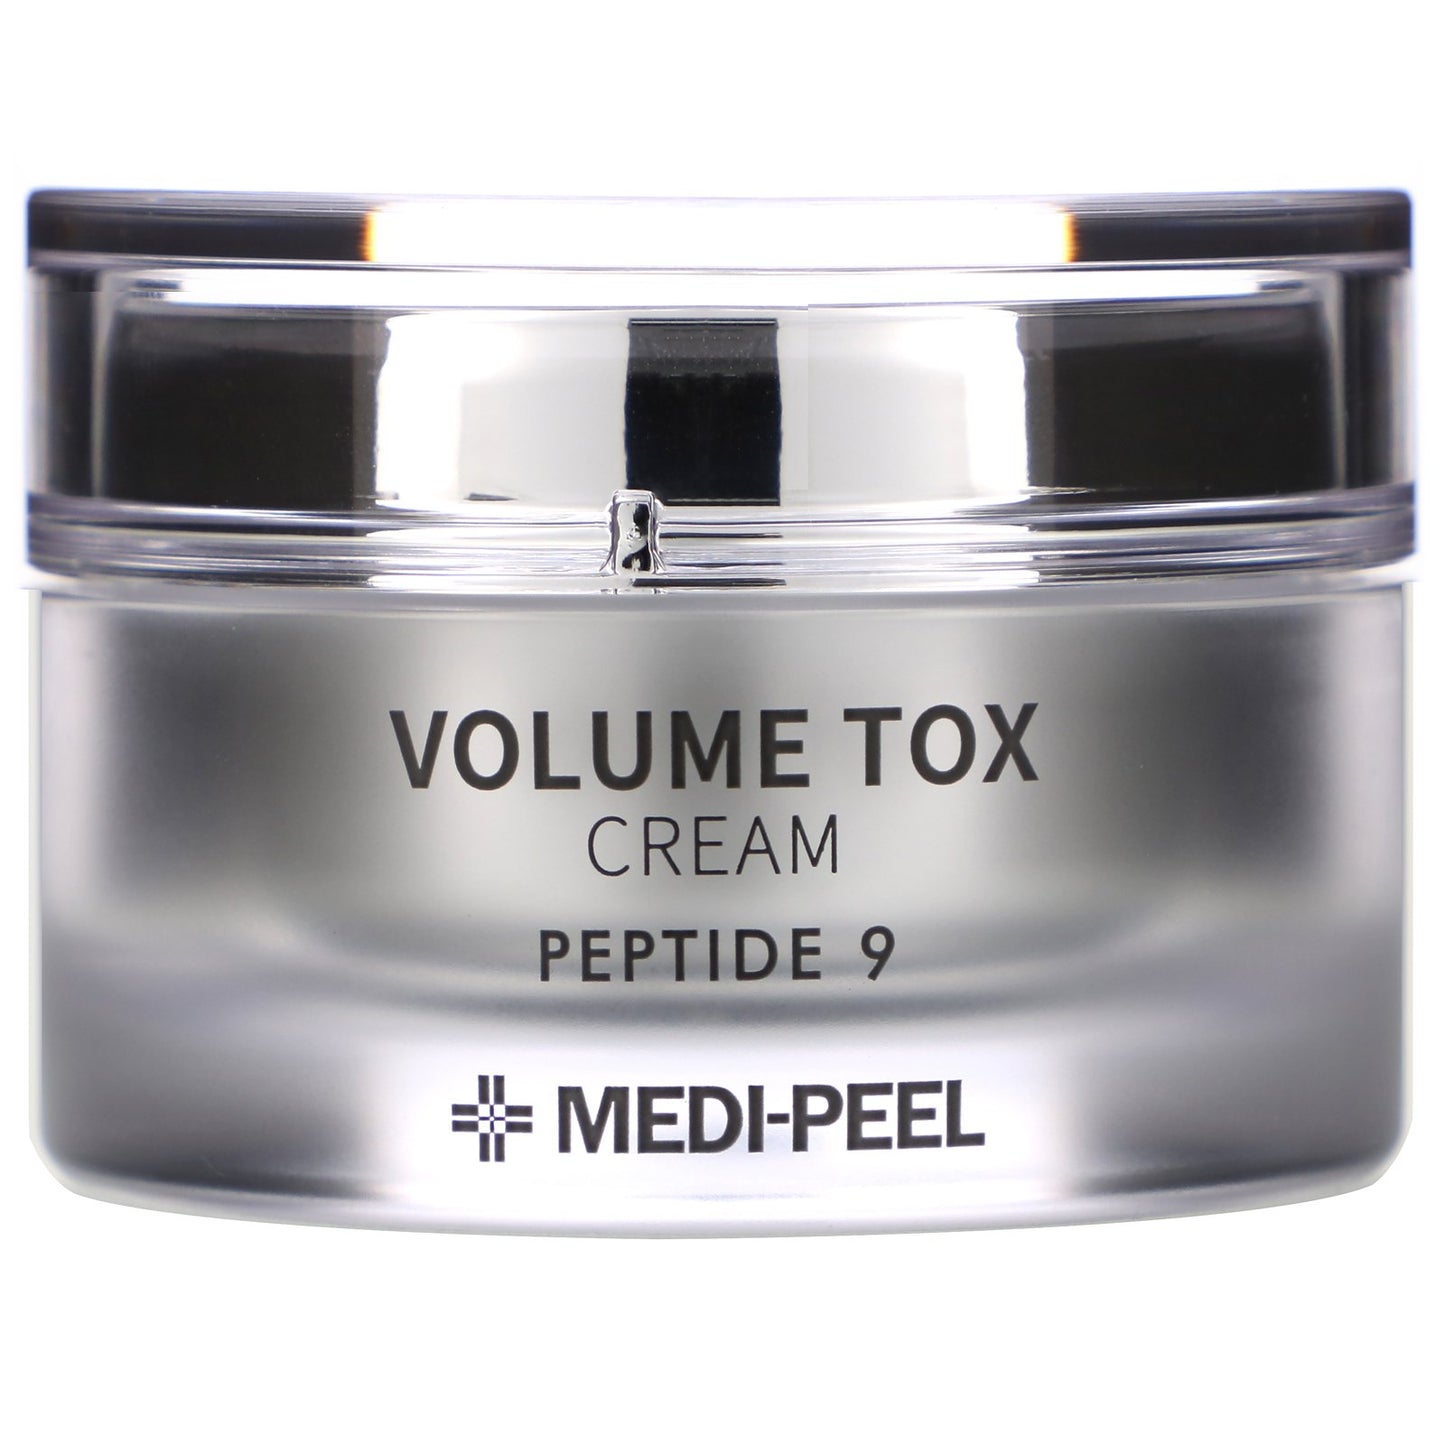 MEDI-PEEL - Peptide 9 Volume Tox Cream 50g